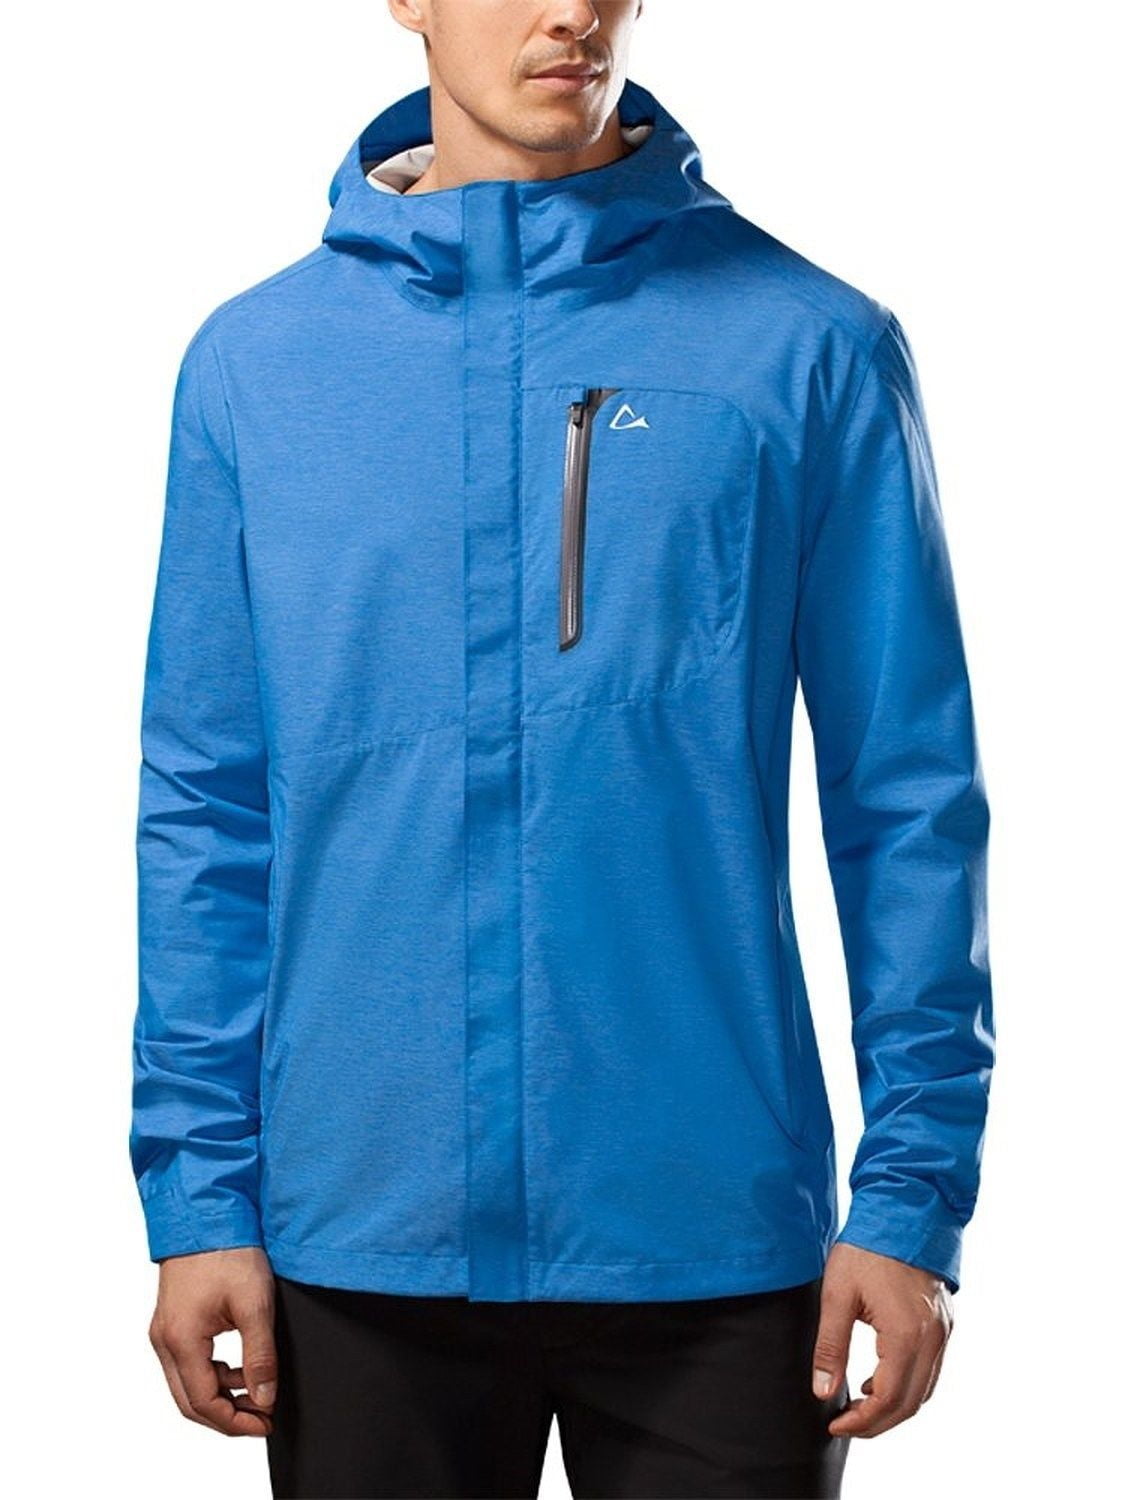 Paradox Men's Waterproof Breathable Rain Jacket - Cobalt Blue - Walmart.com